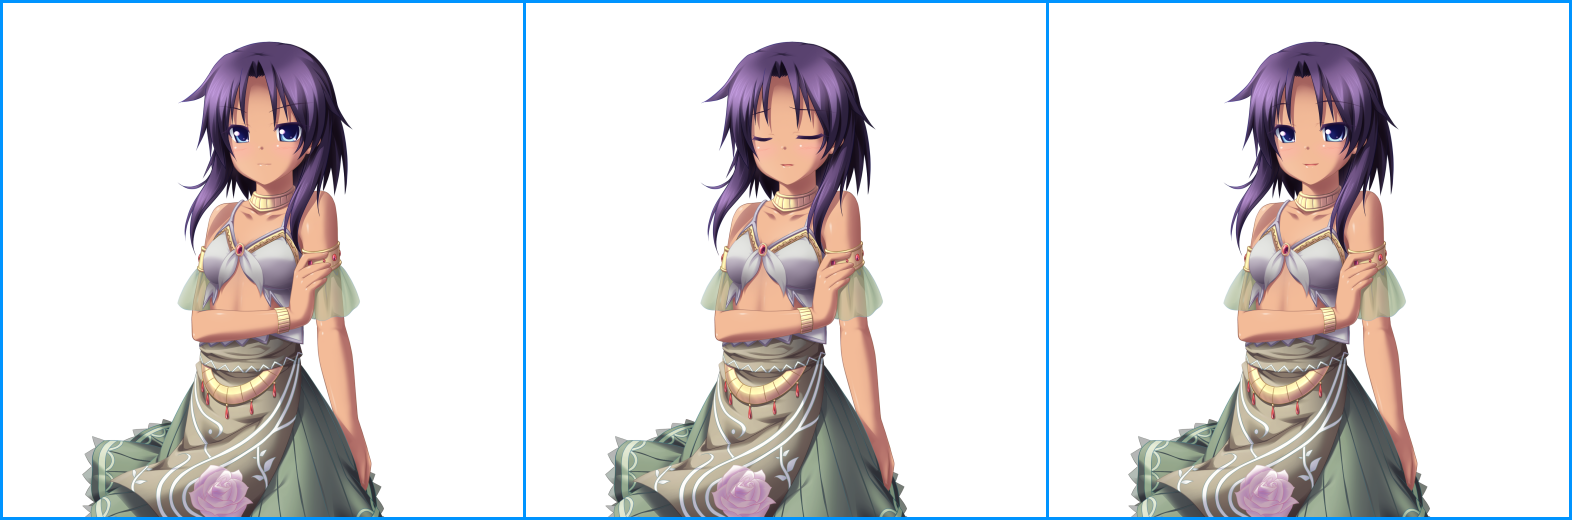 Kamidori Alchemy Meister - City Girl #2